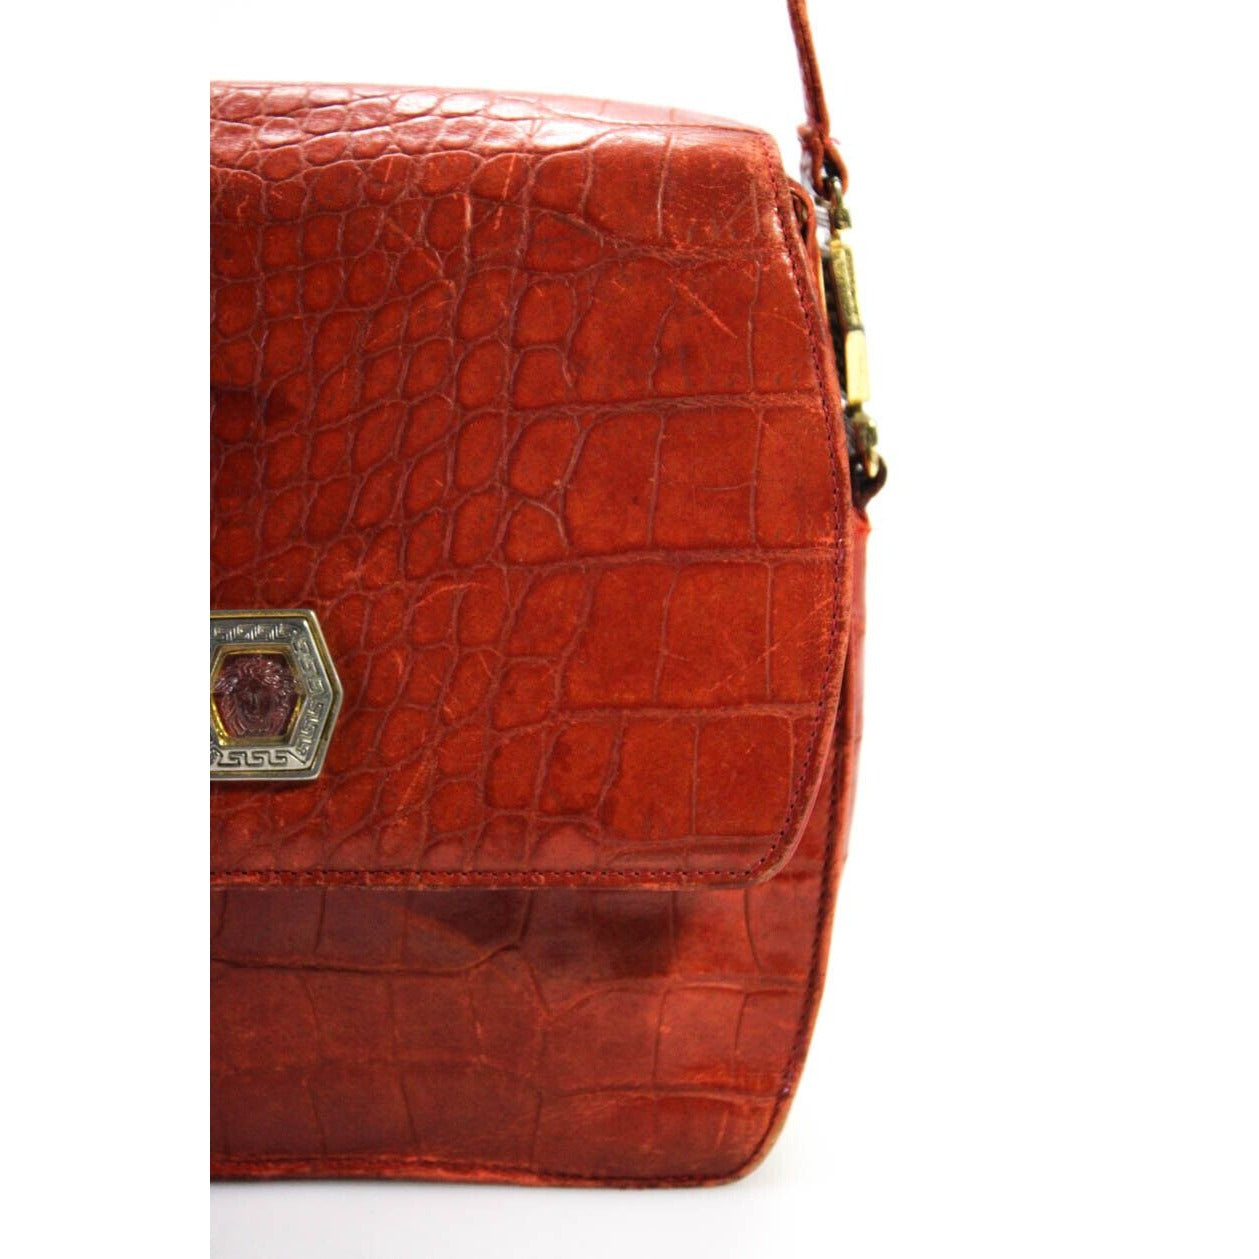 Vintage Gianni Versace red crocodile cross body bag